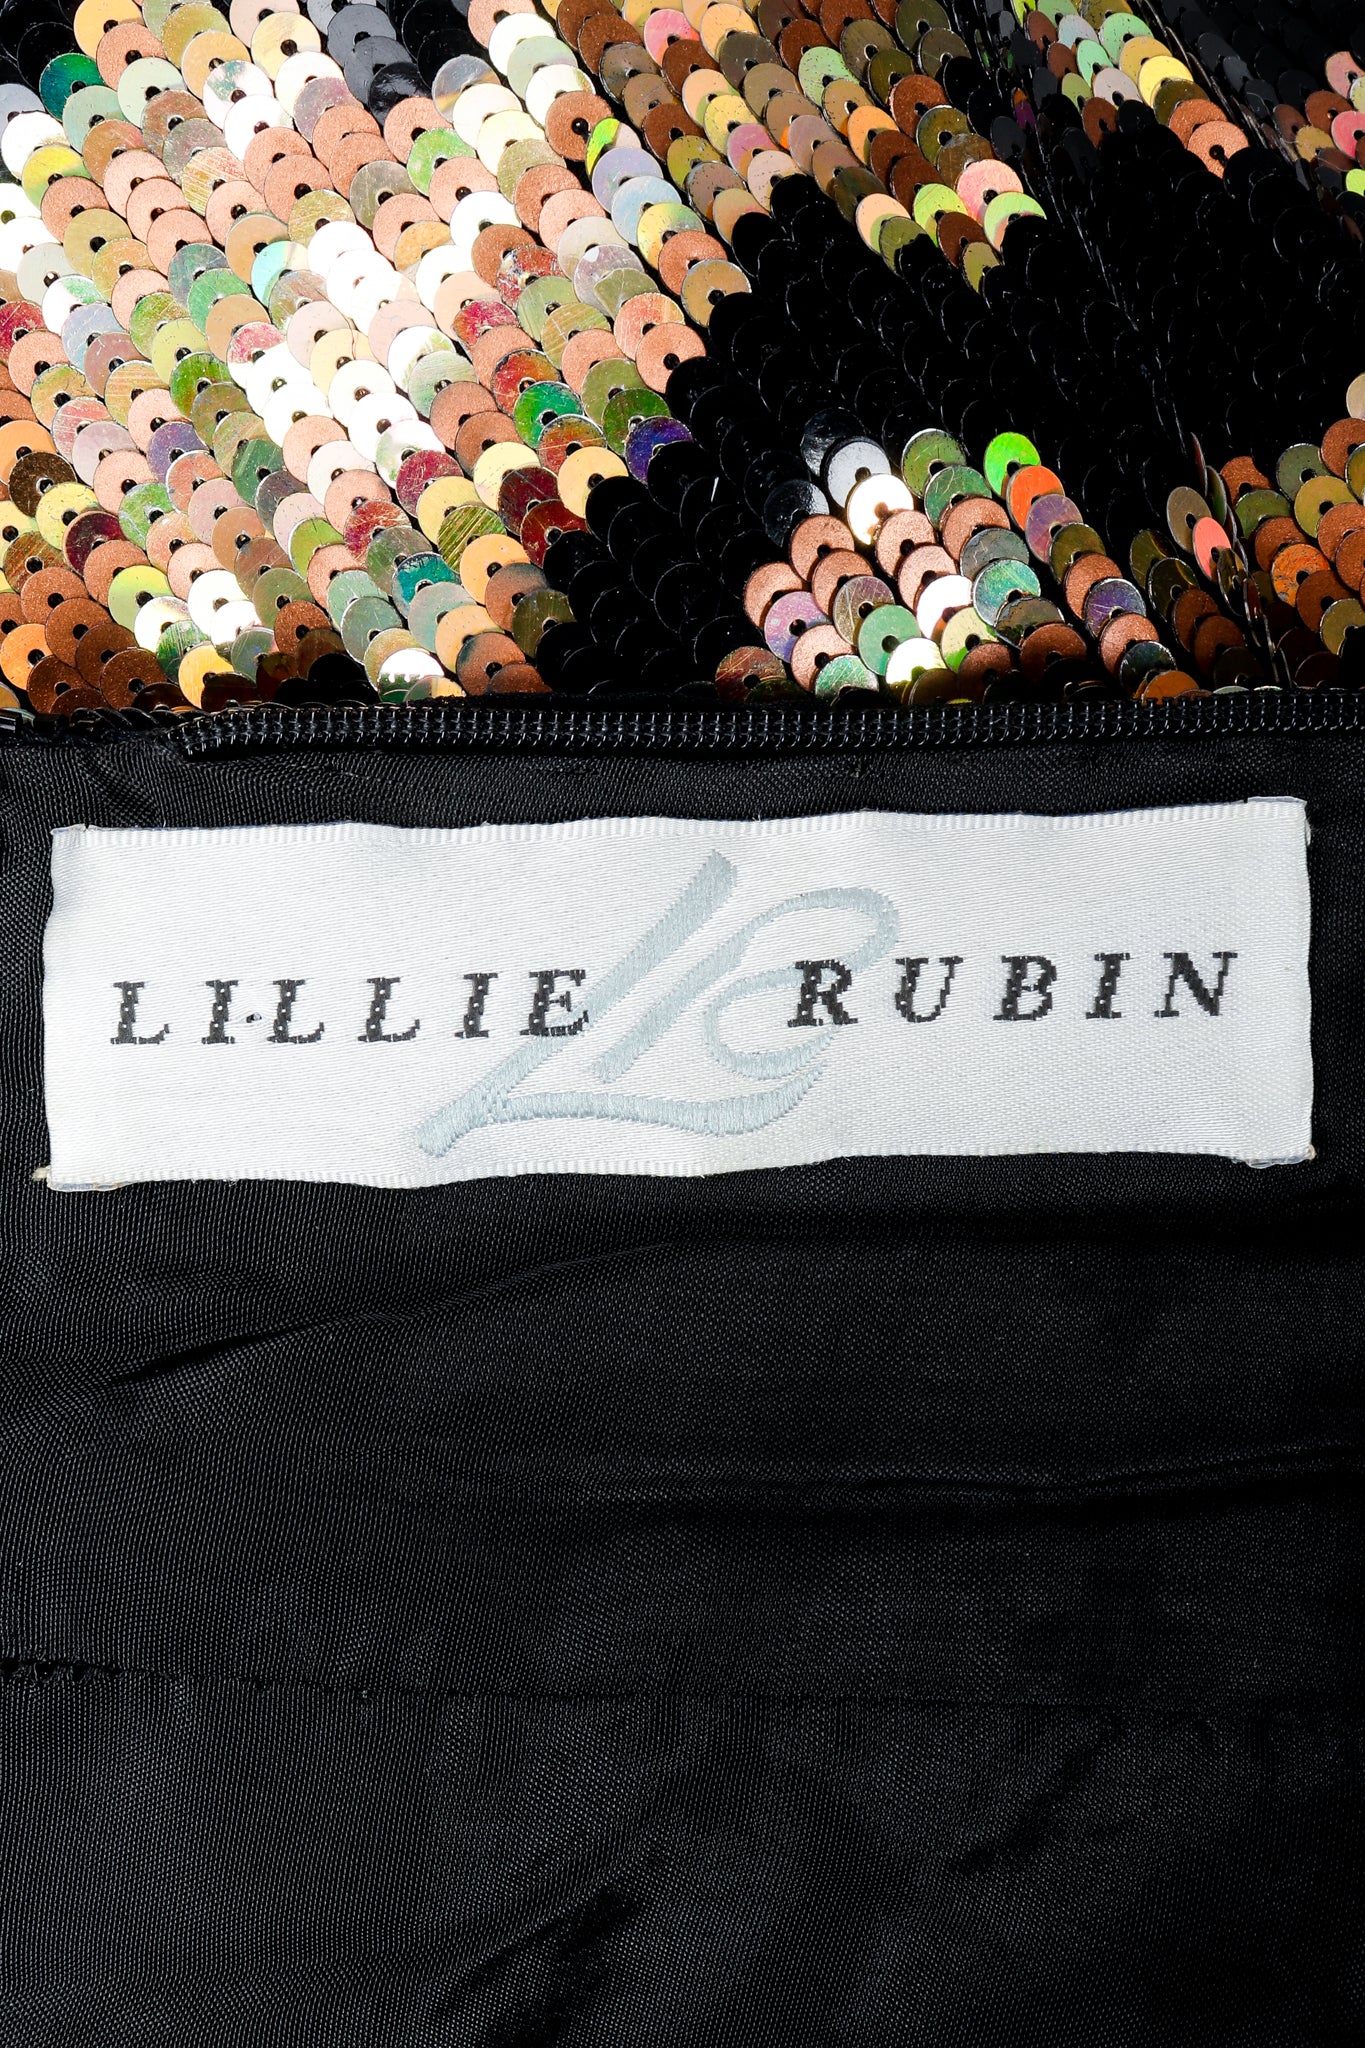 Vintage Riazee Boutique Lillie Rubin collaboration label on black